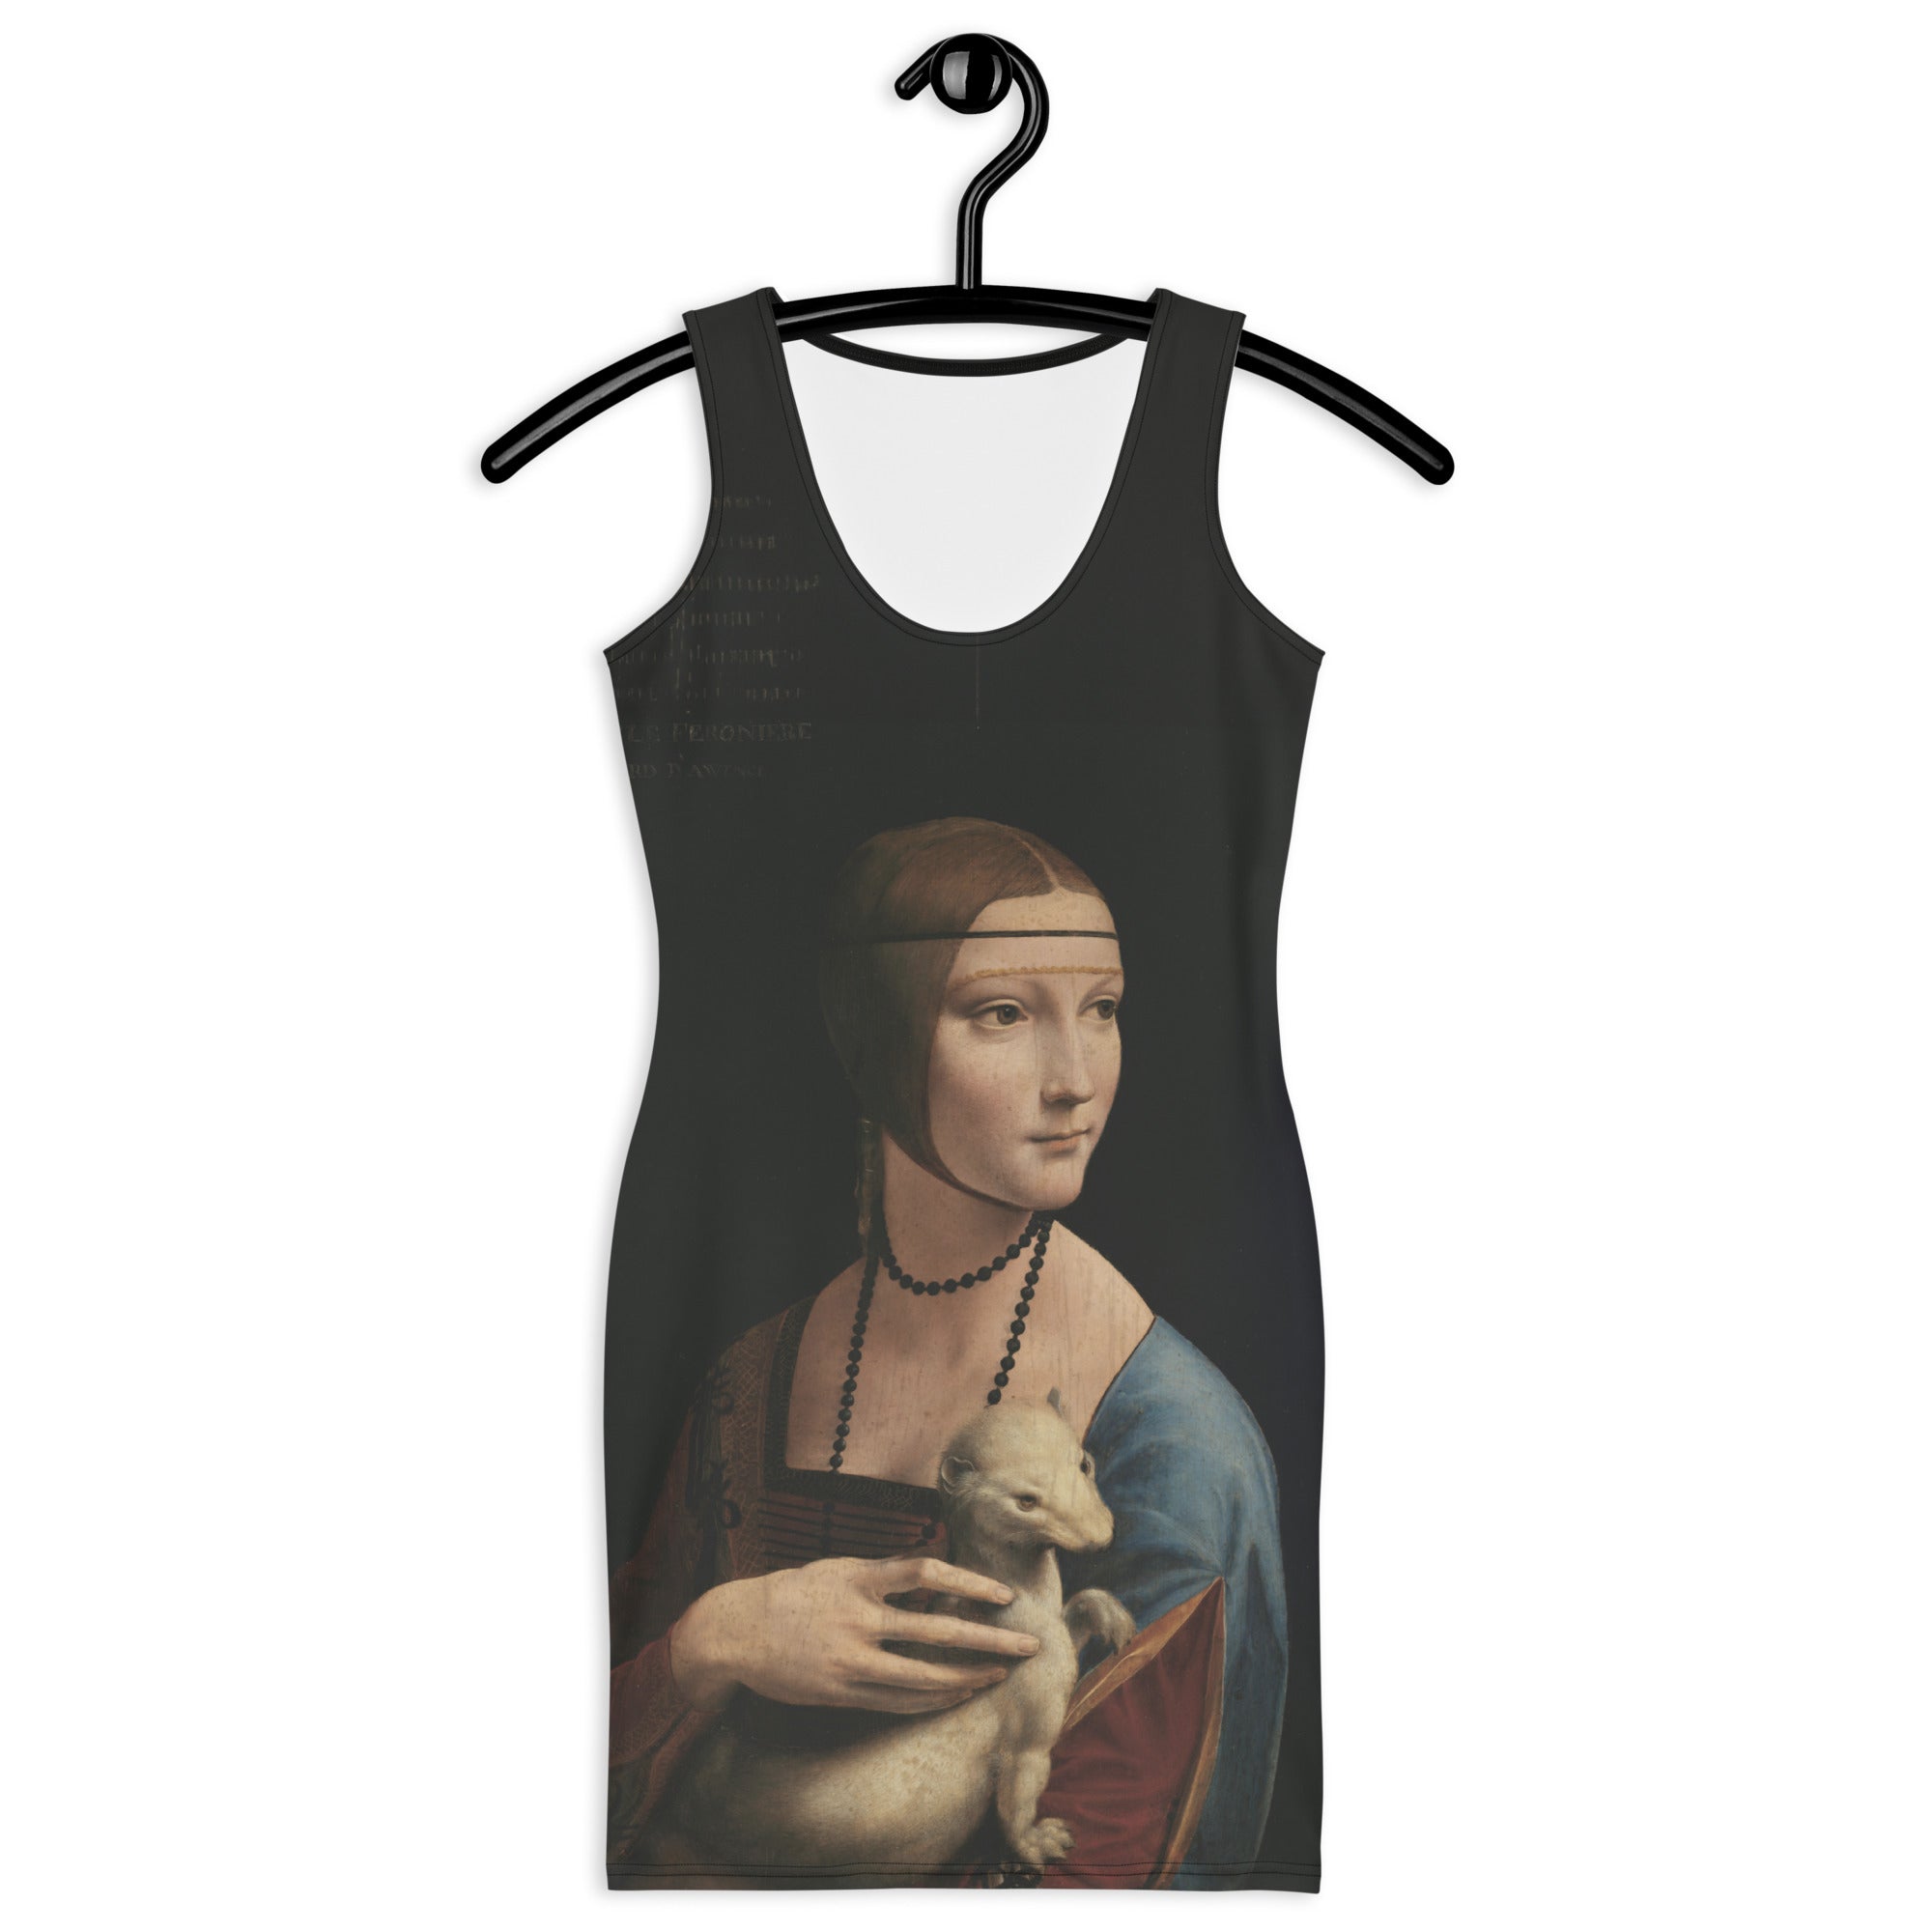 Leonardo da Vinci 'Lady with an Ermine' Famous Painting Bodycon Dress | Premium Art Dress